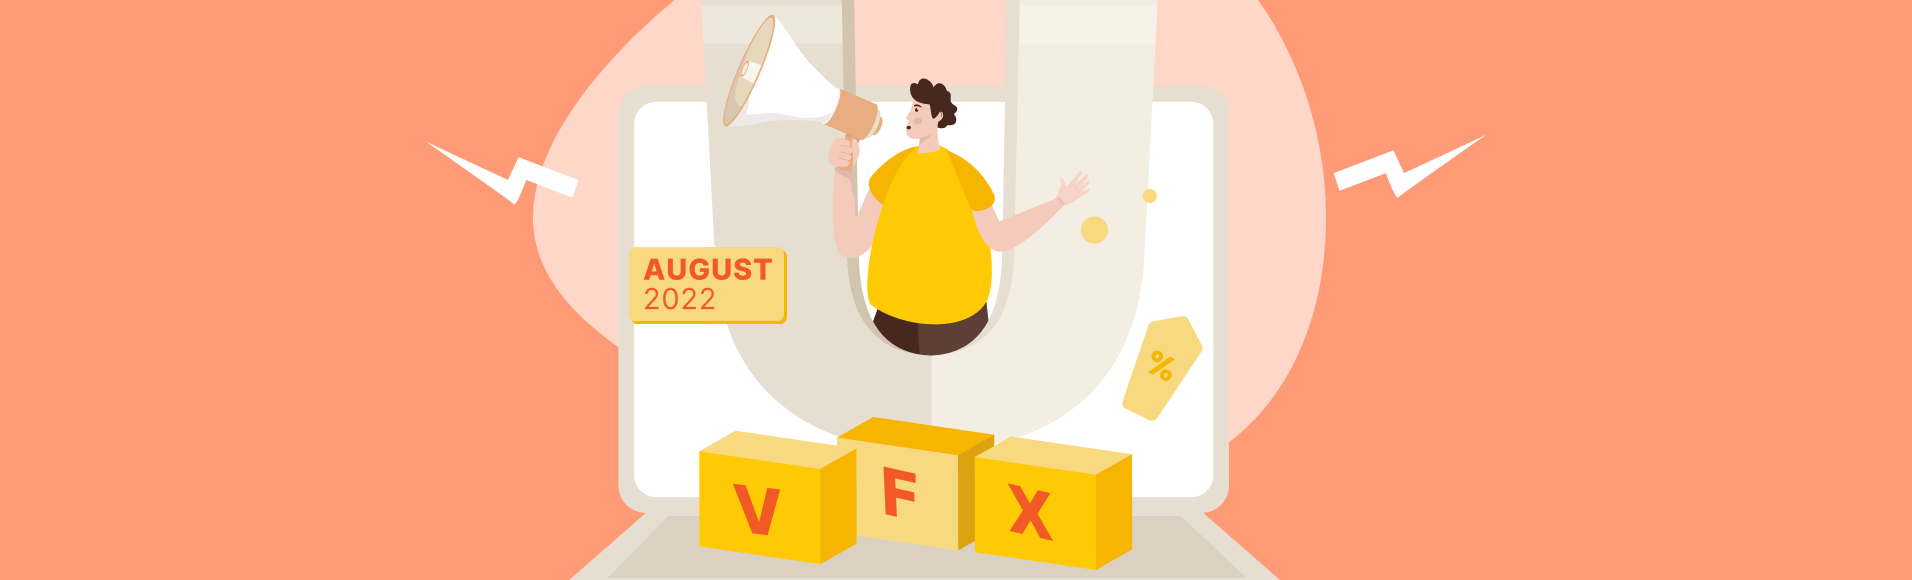 Kampanye promosi vfxAlert pada Agustus 2022